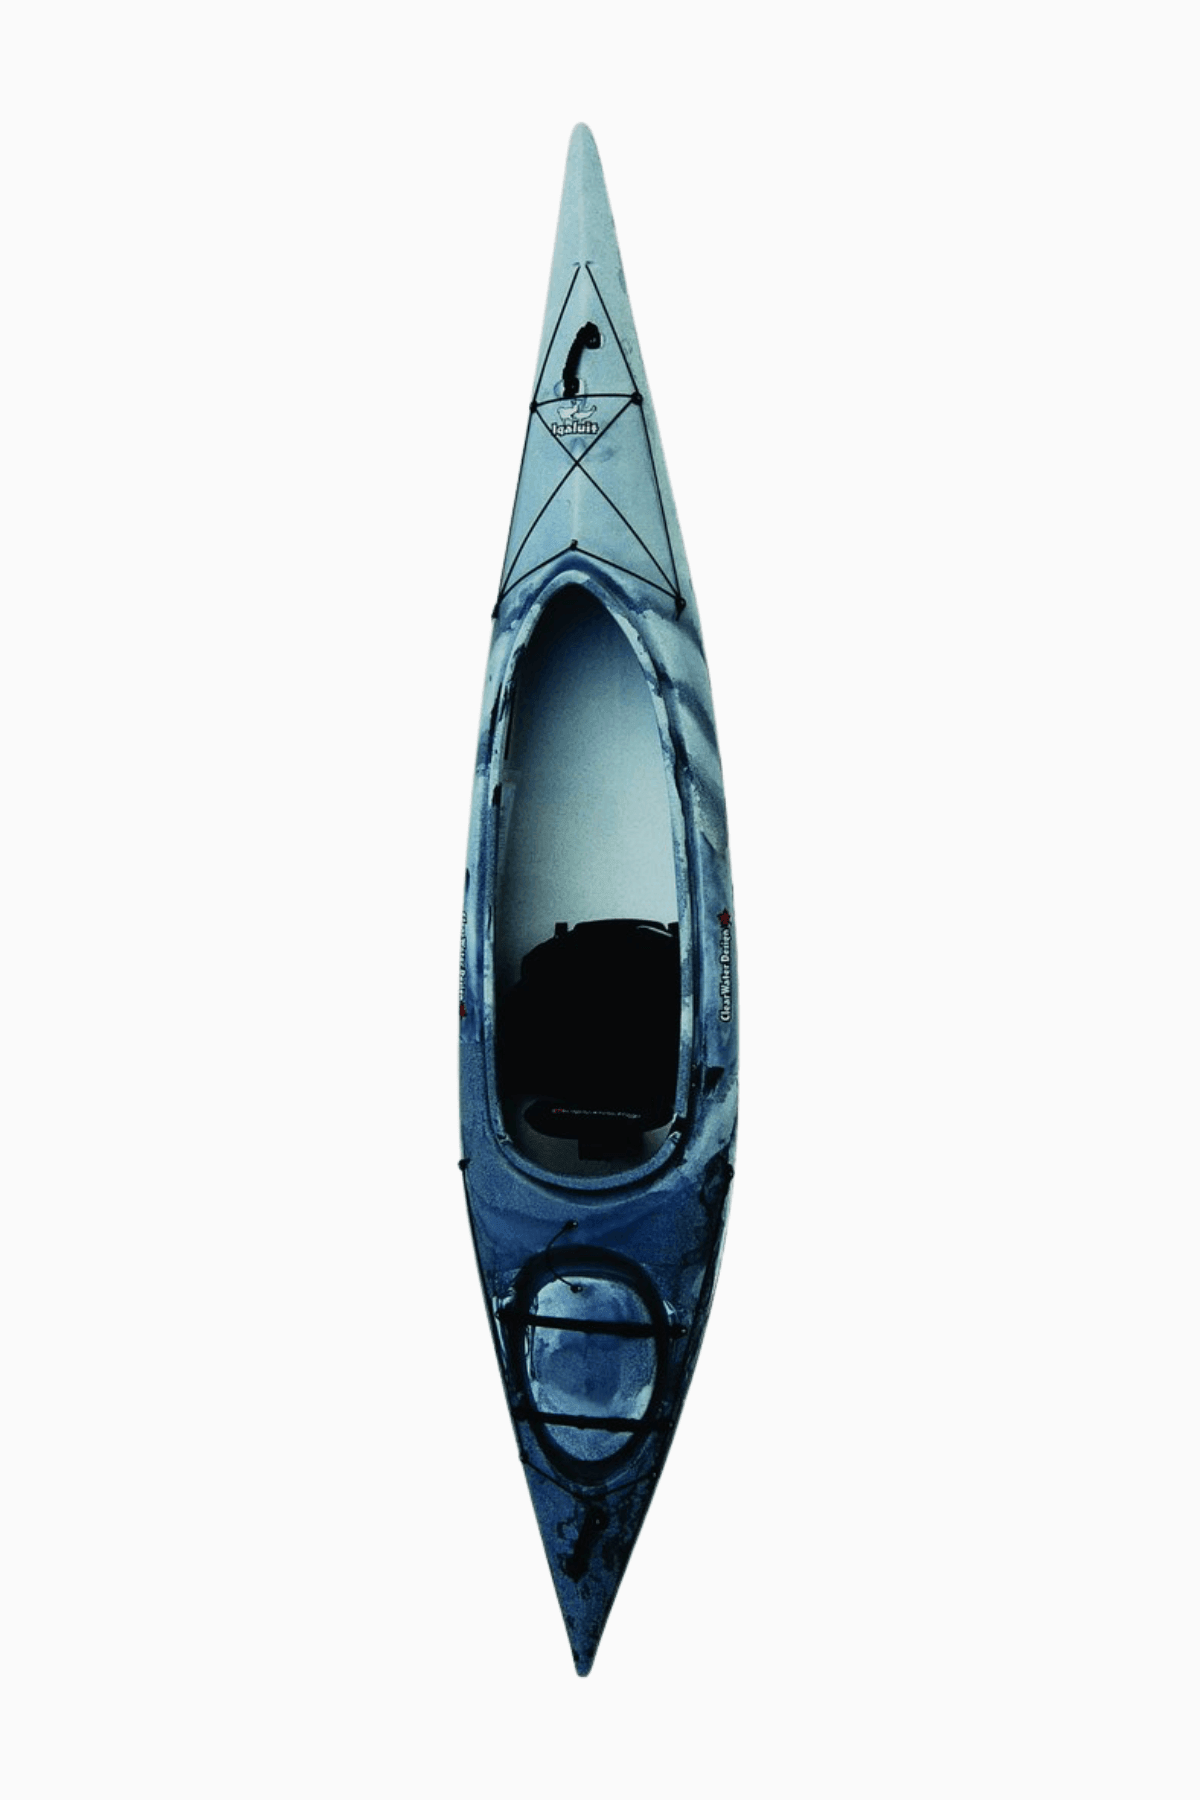 TOB Best Kayak For Sale Toronto Canada – TOB Outdoors Canada